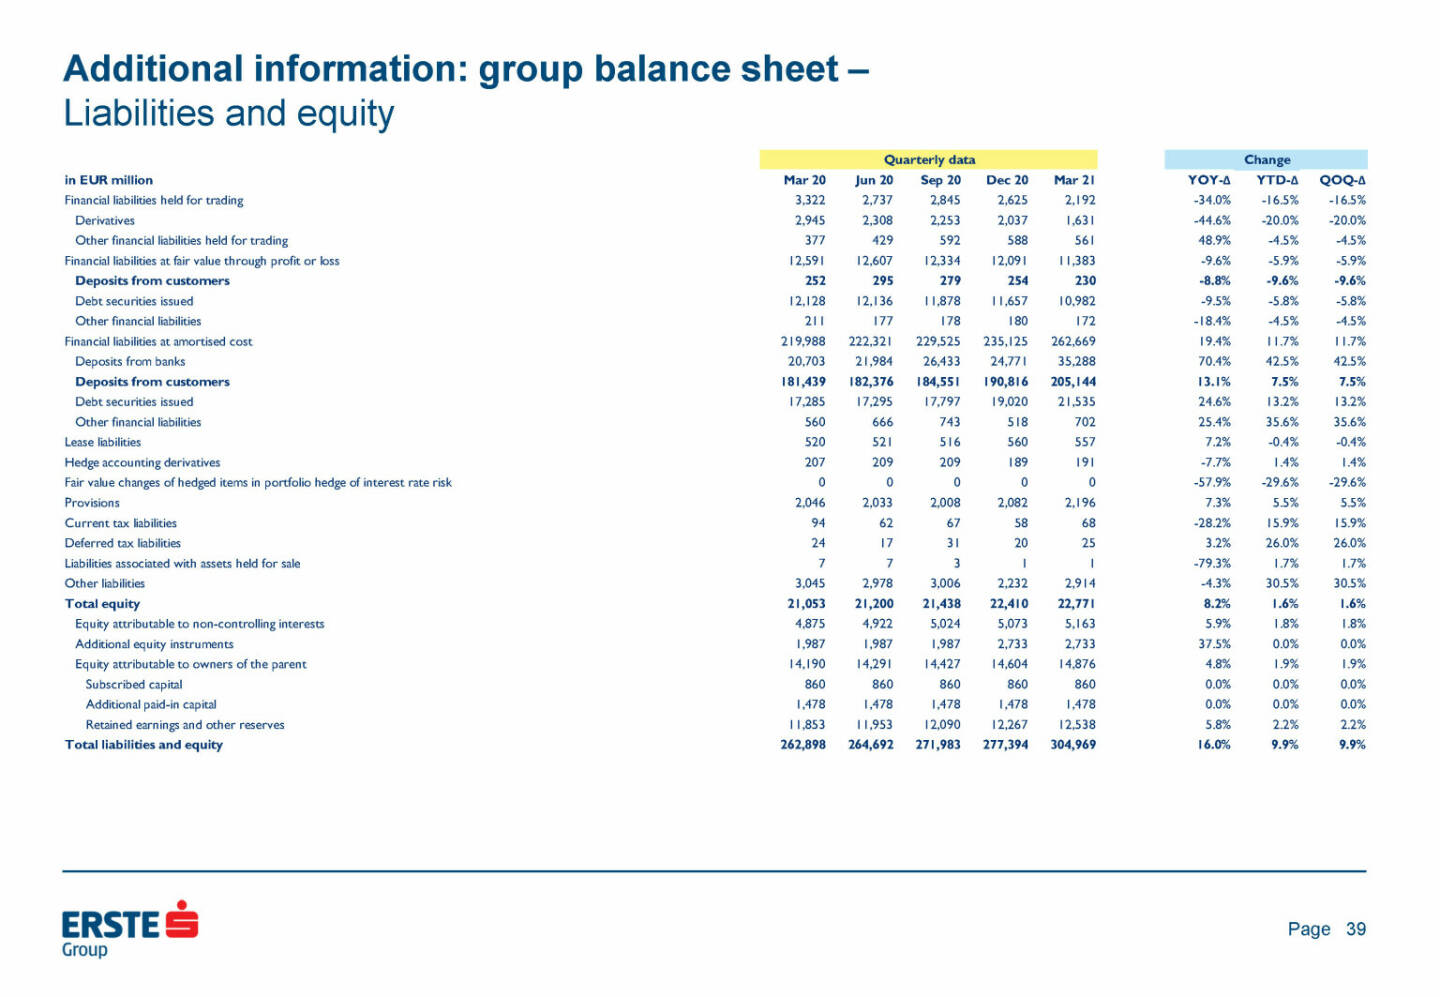 Erste Group - Additional information: group balance sheet